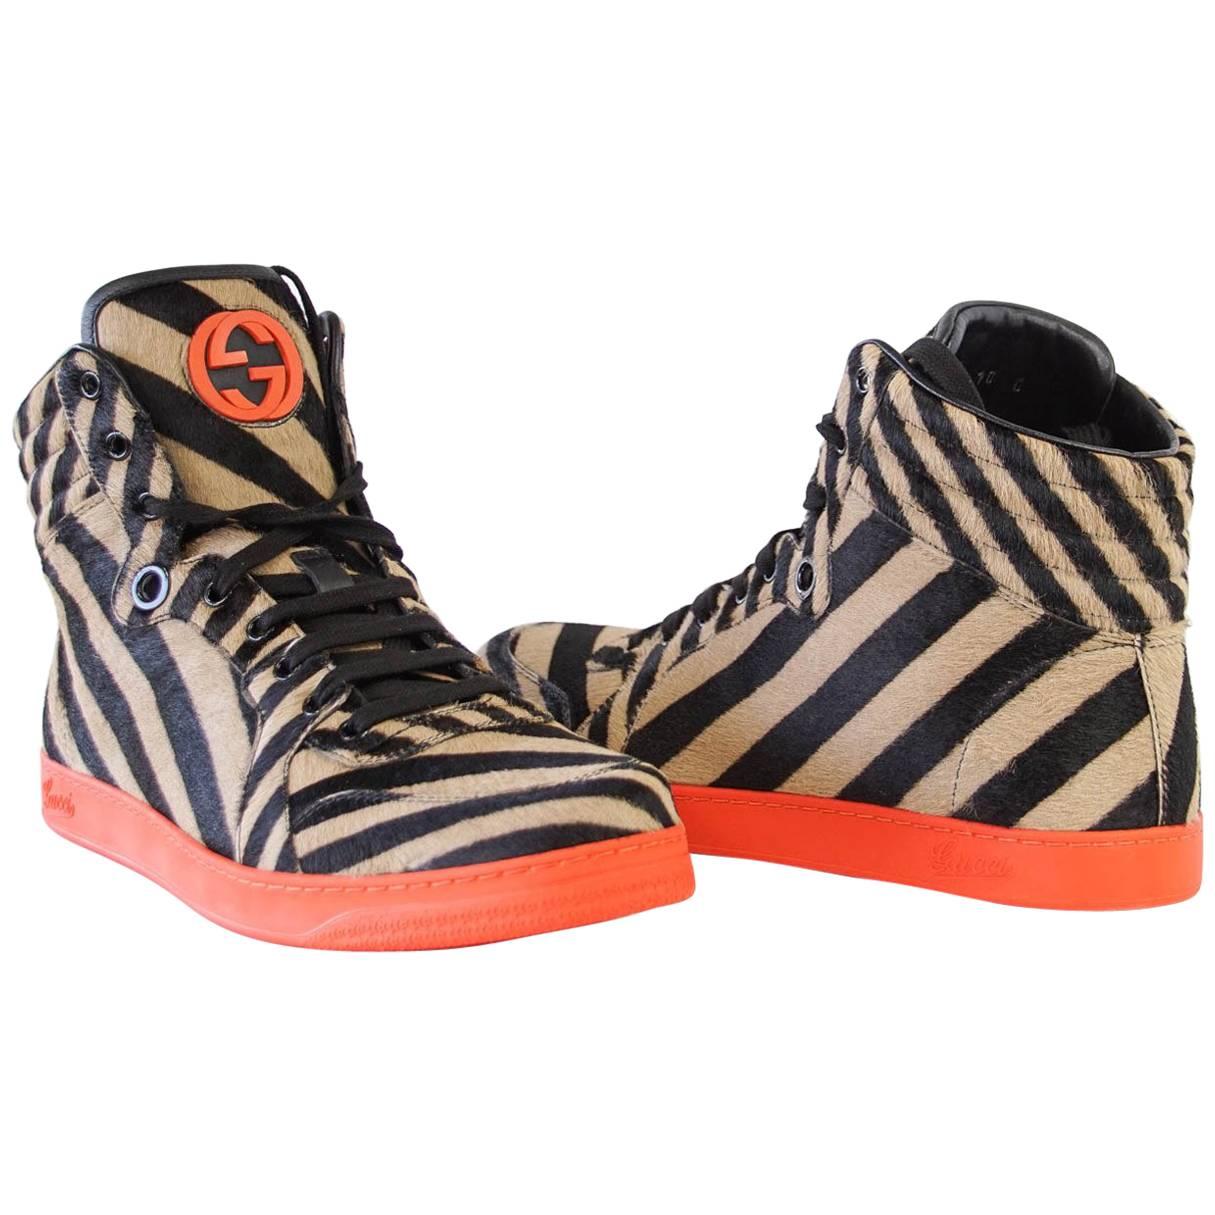  Gucci Men's Shoe Pony Stripe Black / Camel Orange Sole High Top Sneaker 10 G 